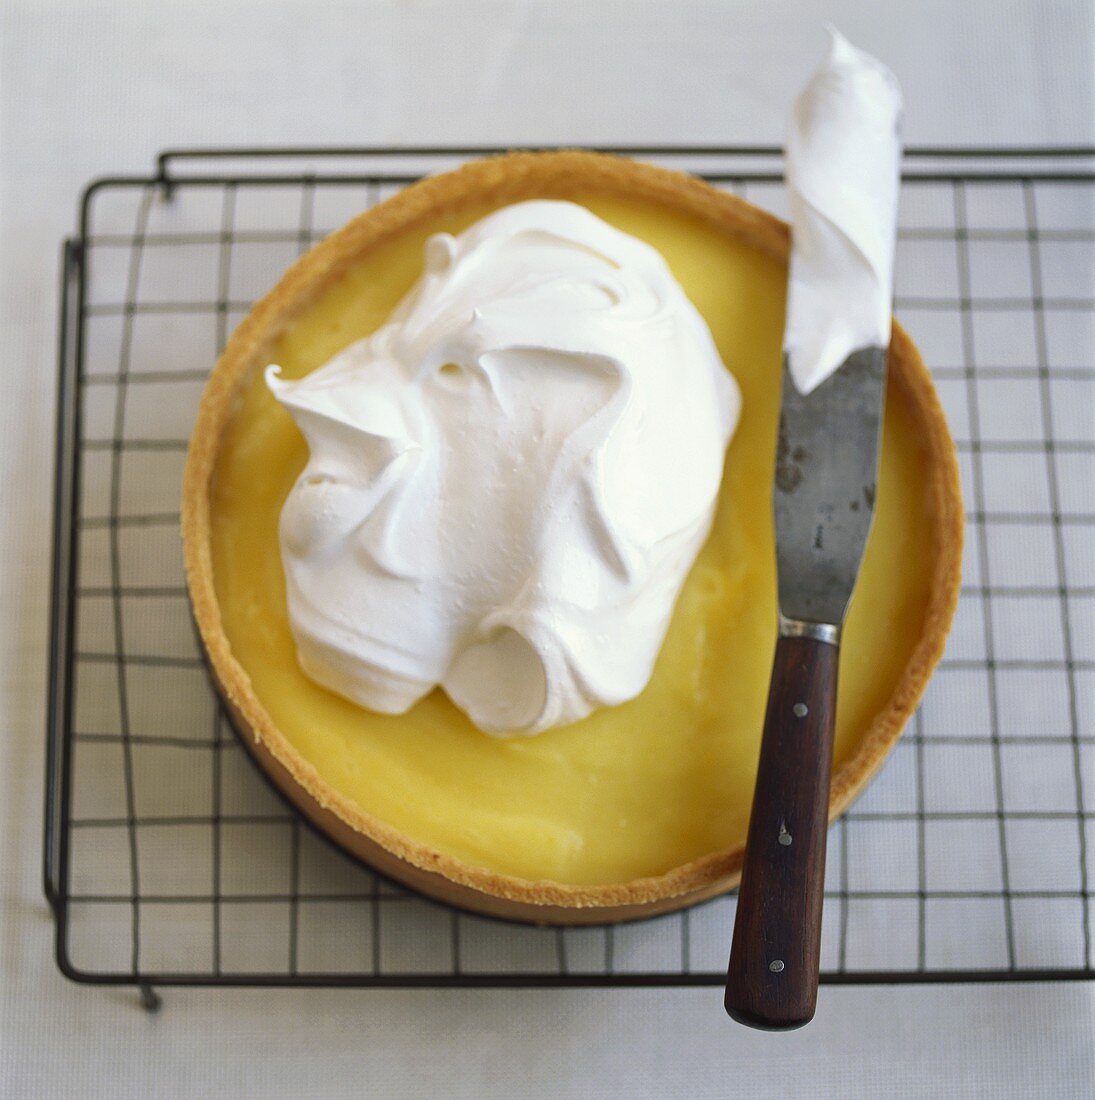 Spreading vanilla tart with whipped cream